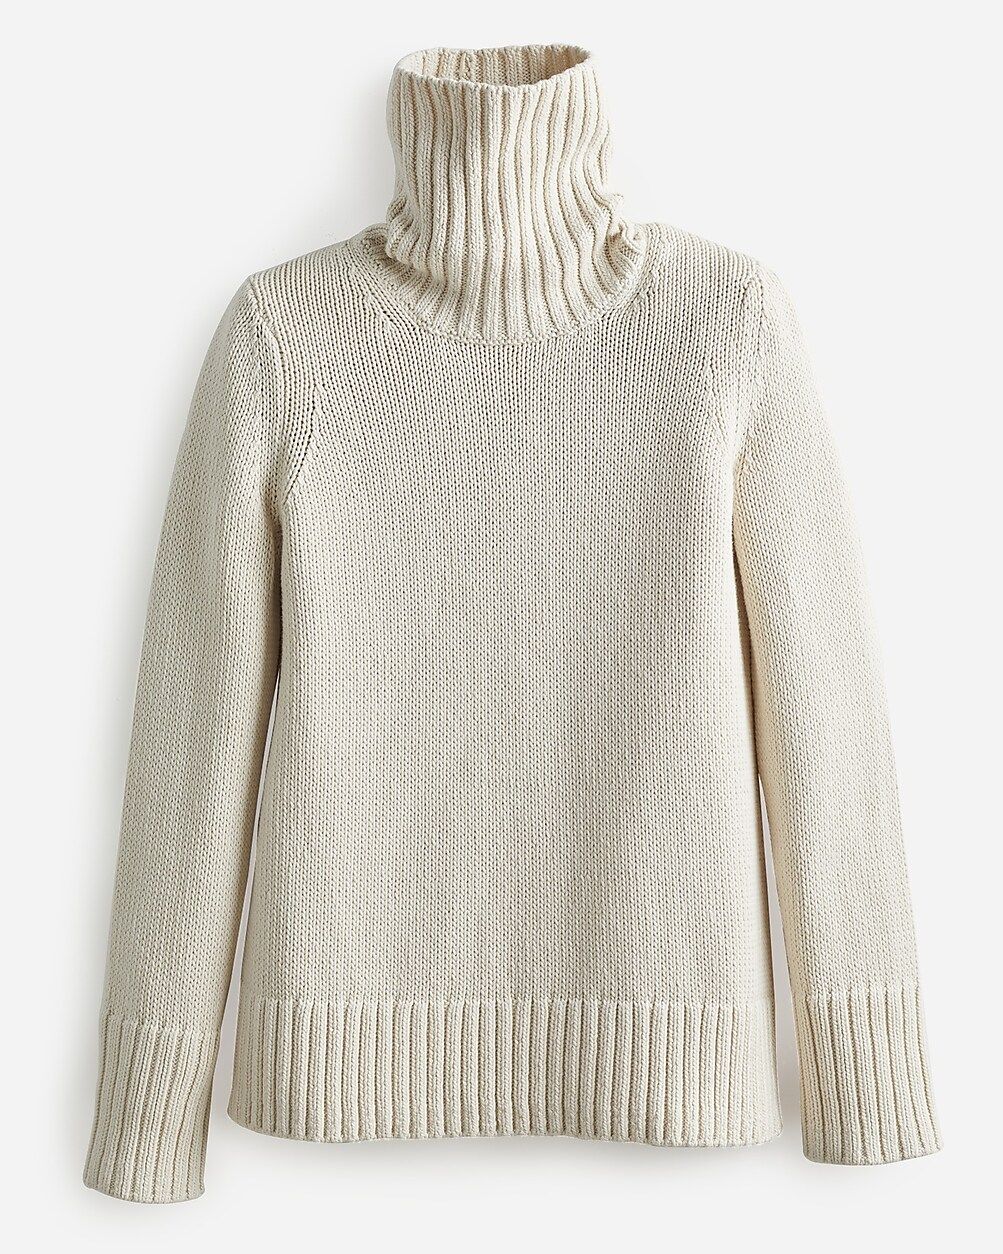 State of Cotton NYC Wynn sweater | J.Crew US